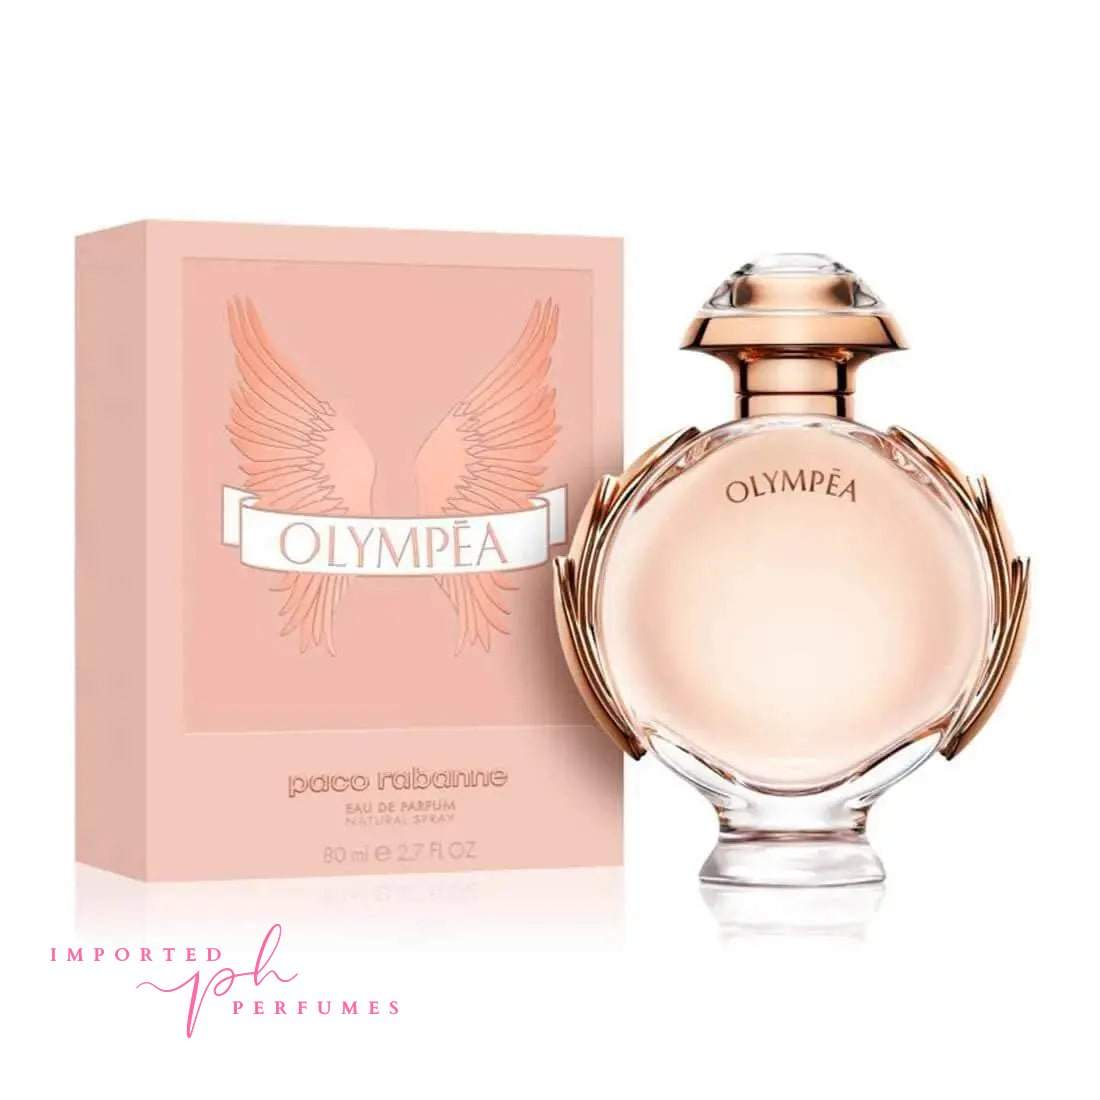 [TESTER] Olympéa Aqua By Paco Rabanne For Women 80ml Eau De Parfum-Imported Perfumes Co-Paco Rabanne,TESTER,women